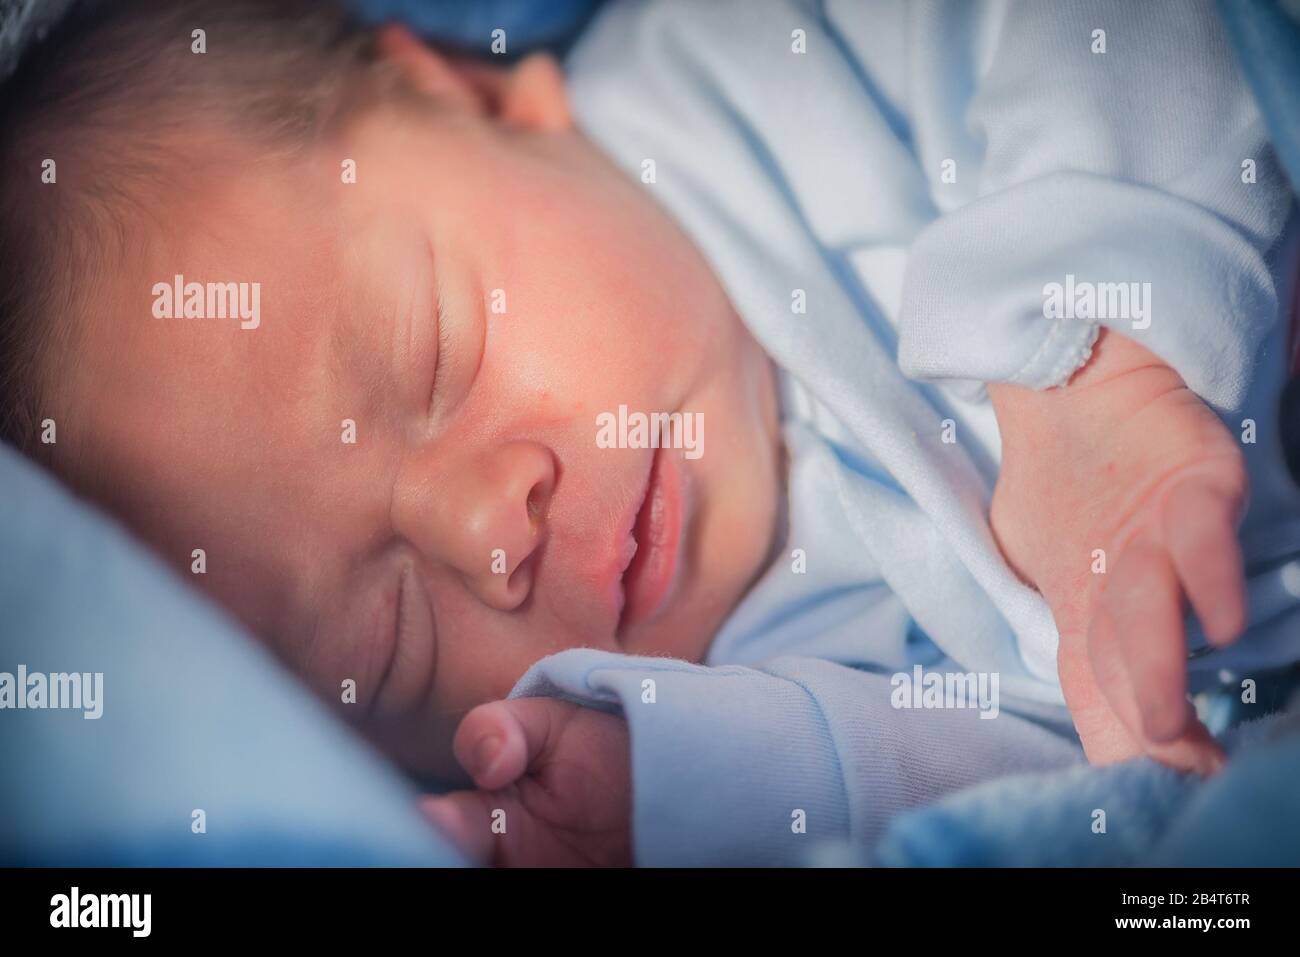 Close up portrait of a newborn baby boy sleeping Stock Photo